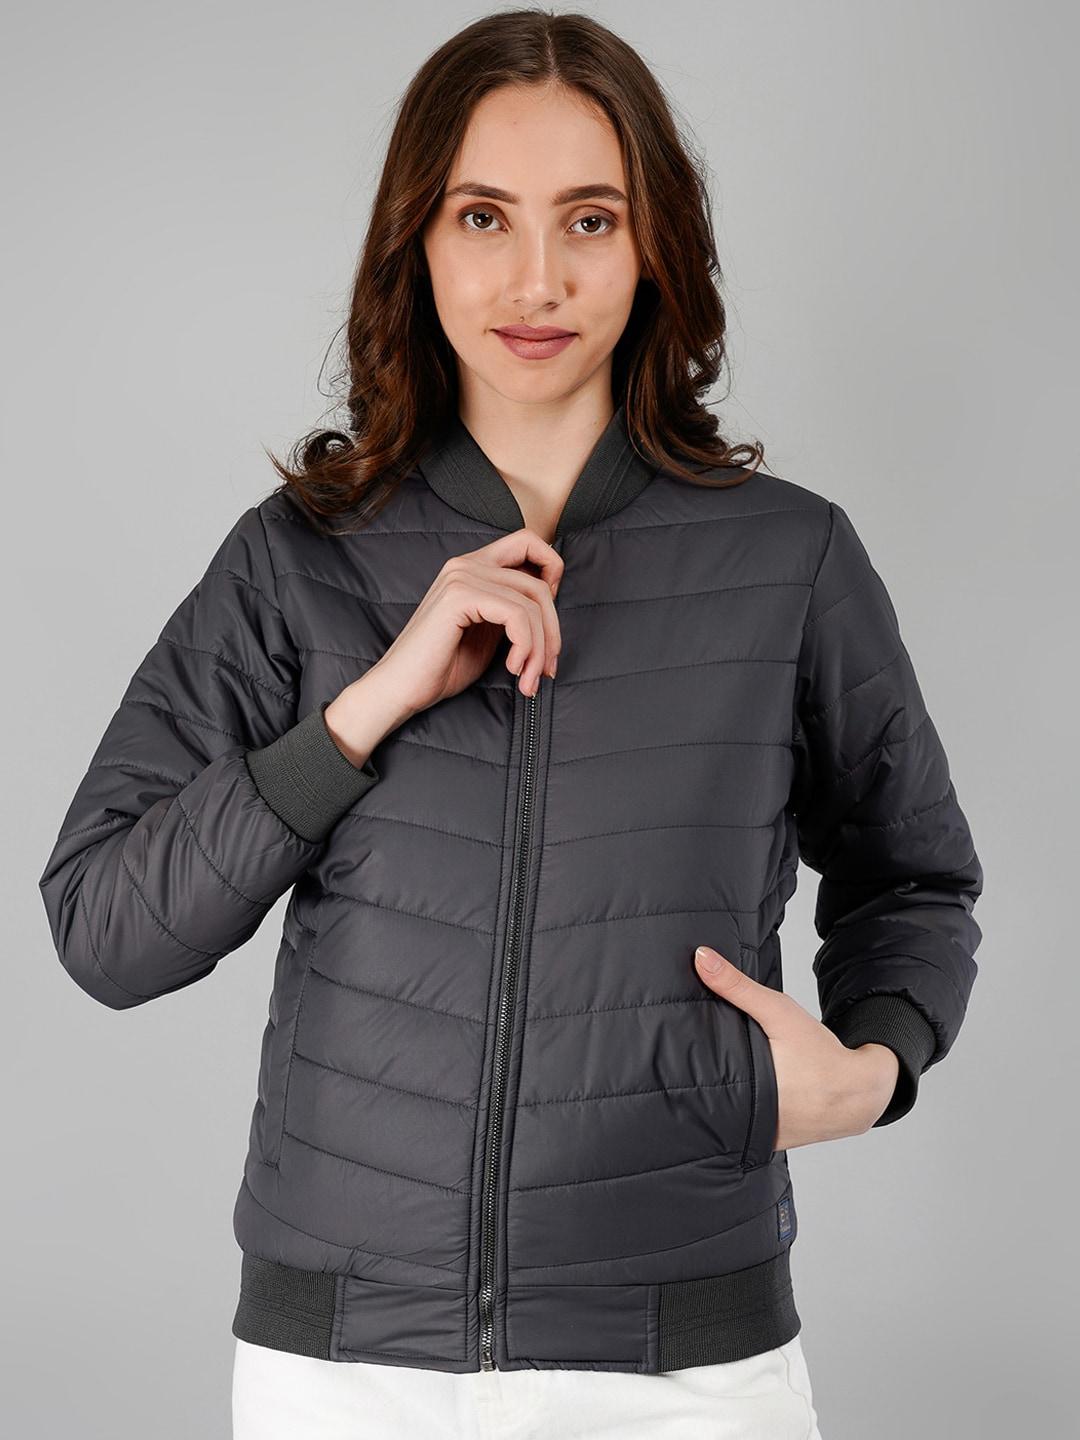 besimple women lightweight outdoor padded jacket